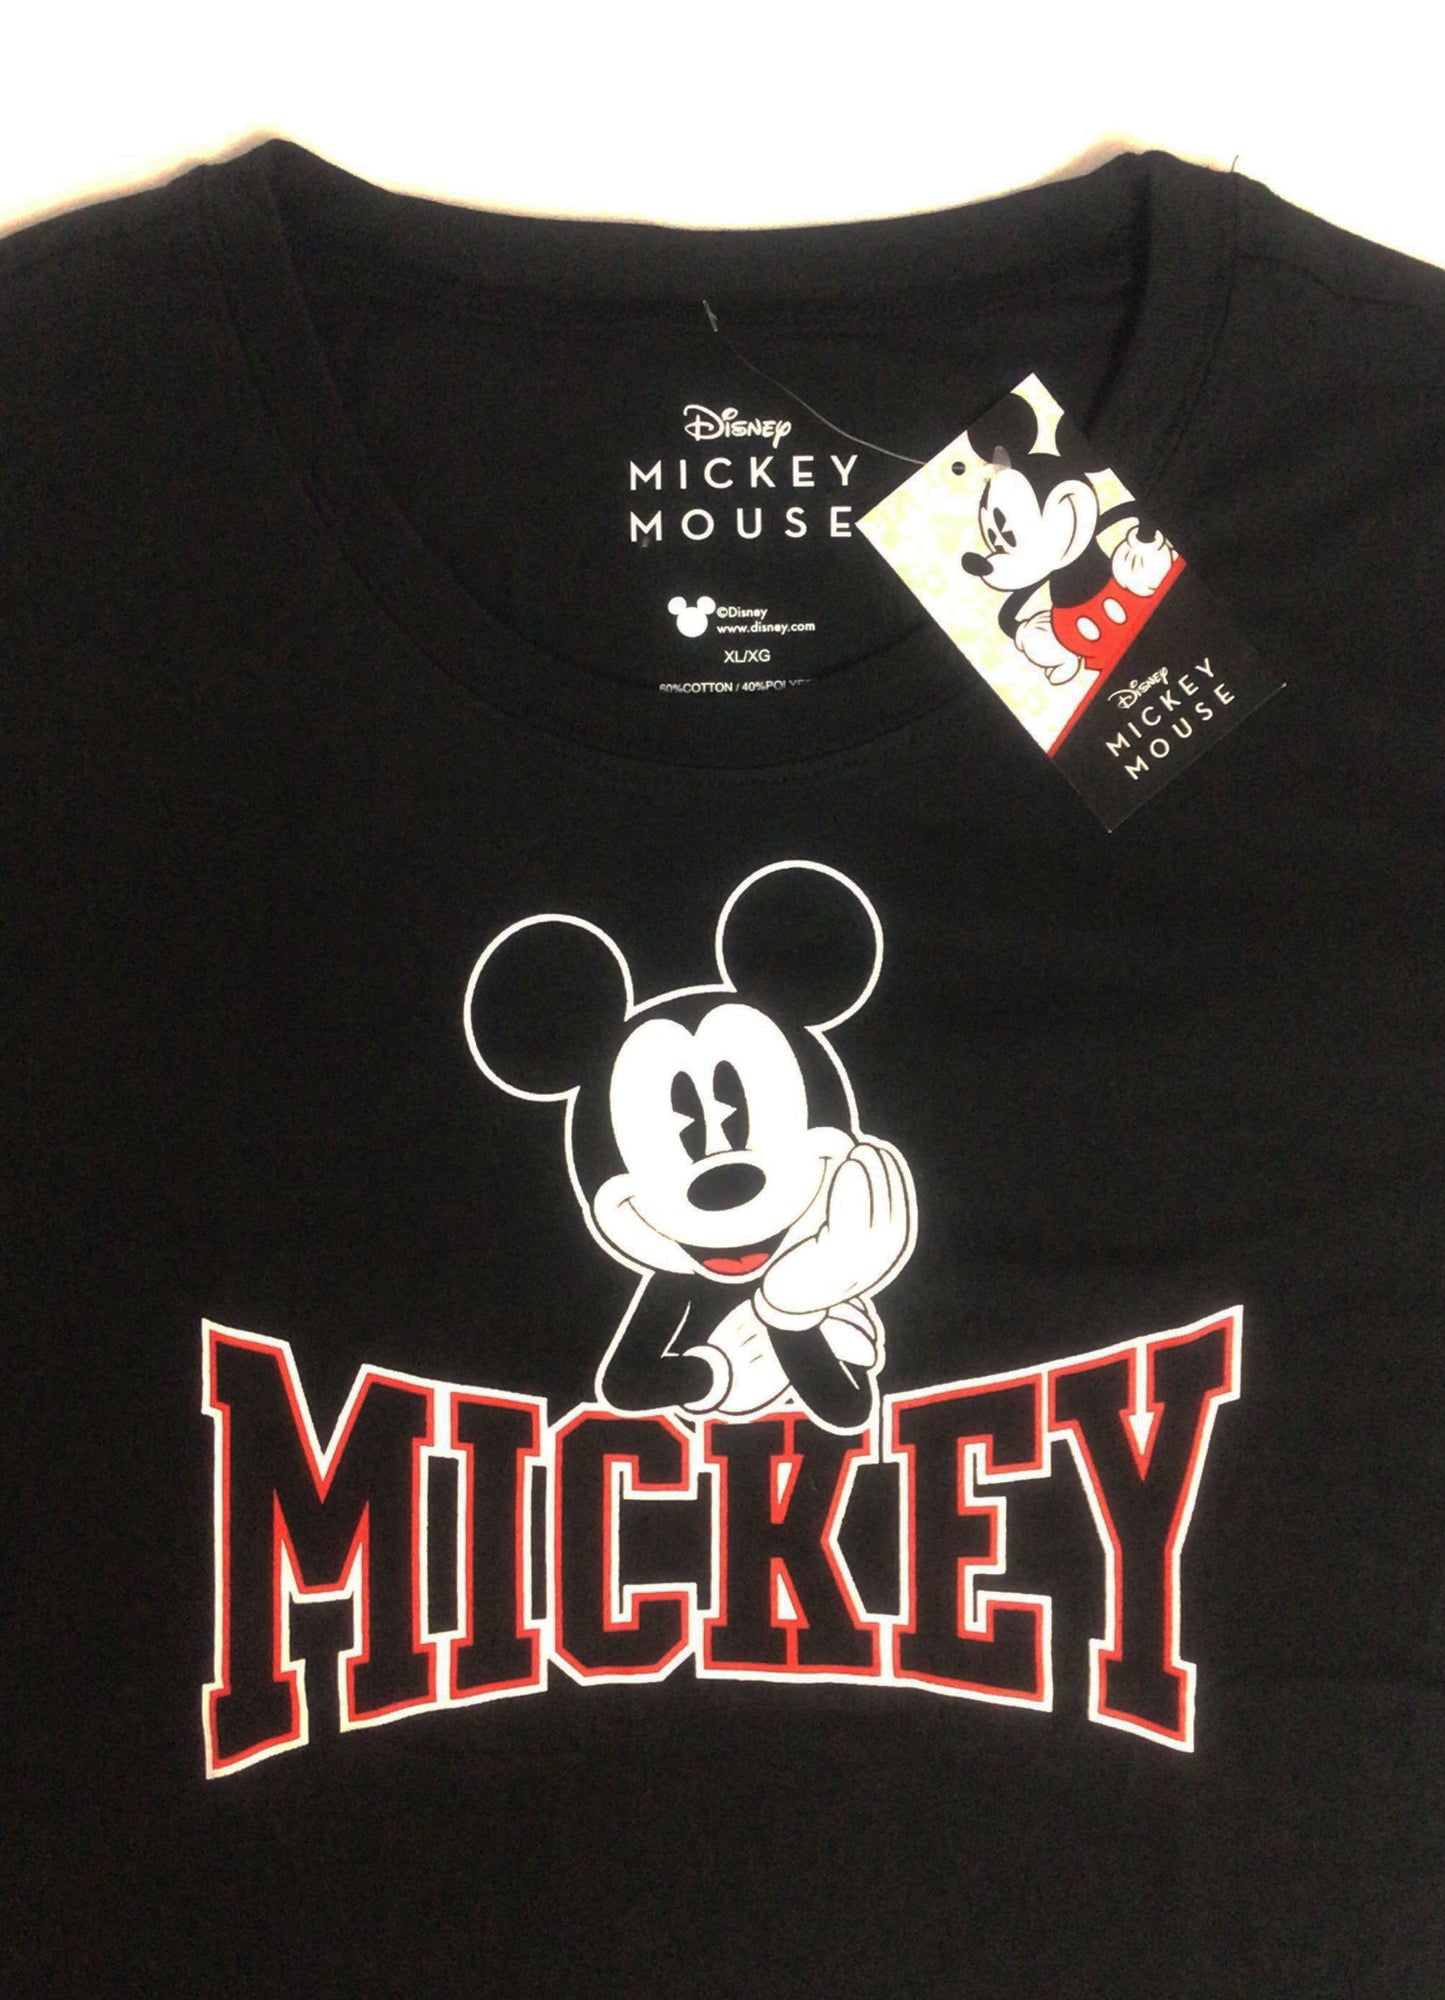 Women's T-shirt Disney 1928 Tee Disney Mickey Mouse Black S M L XL